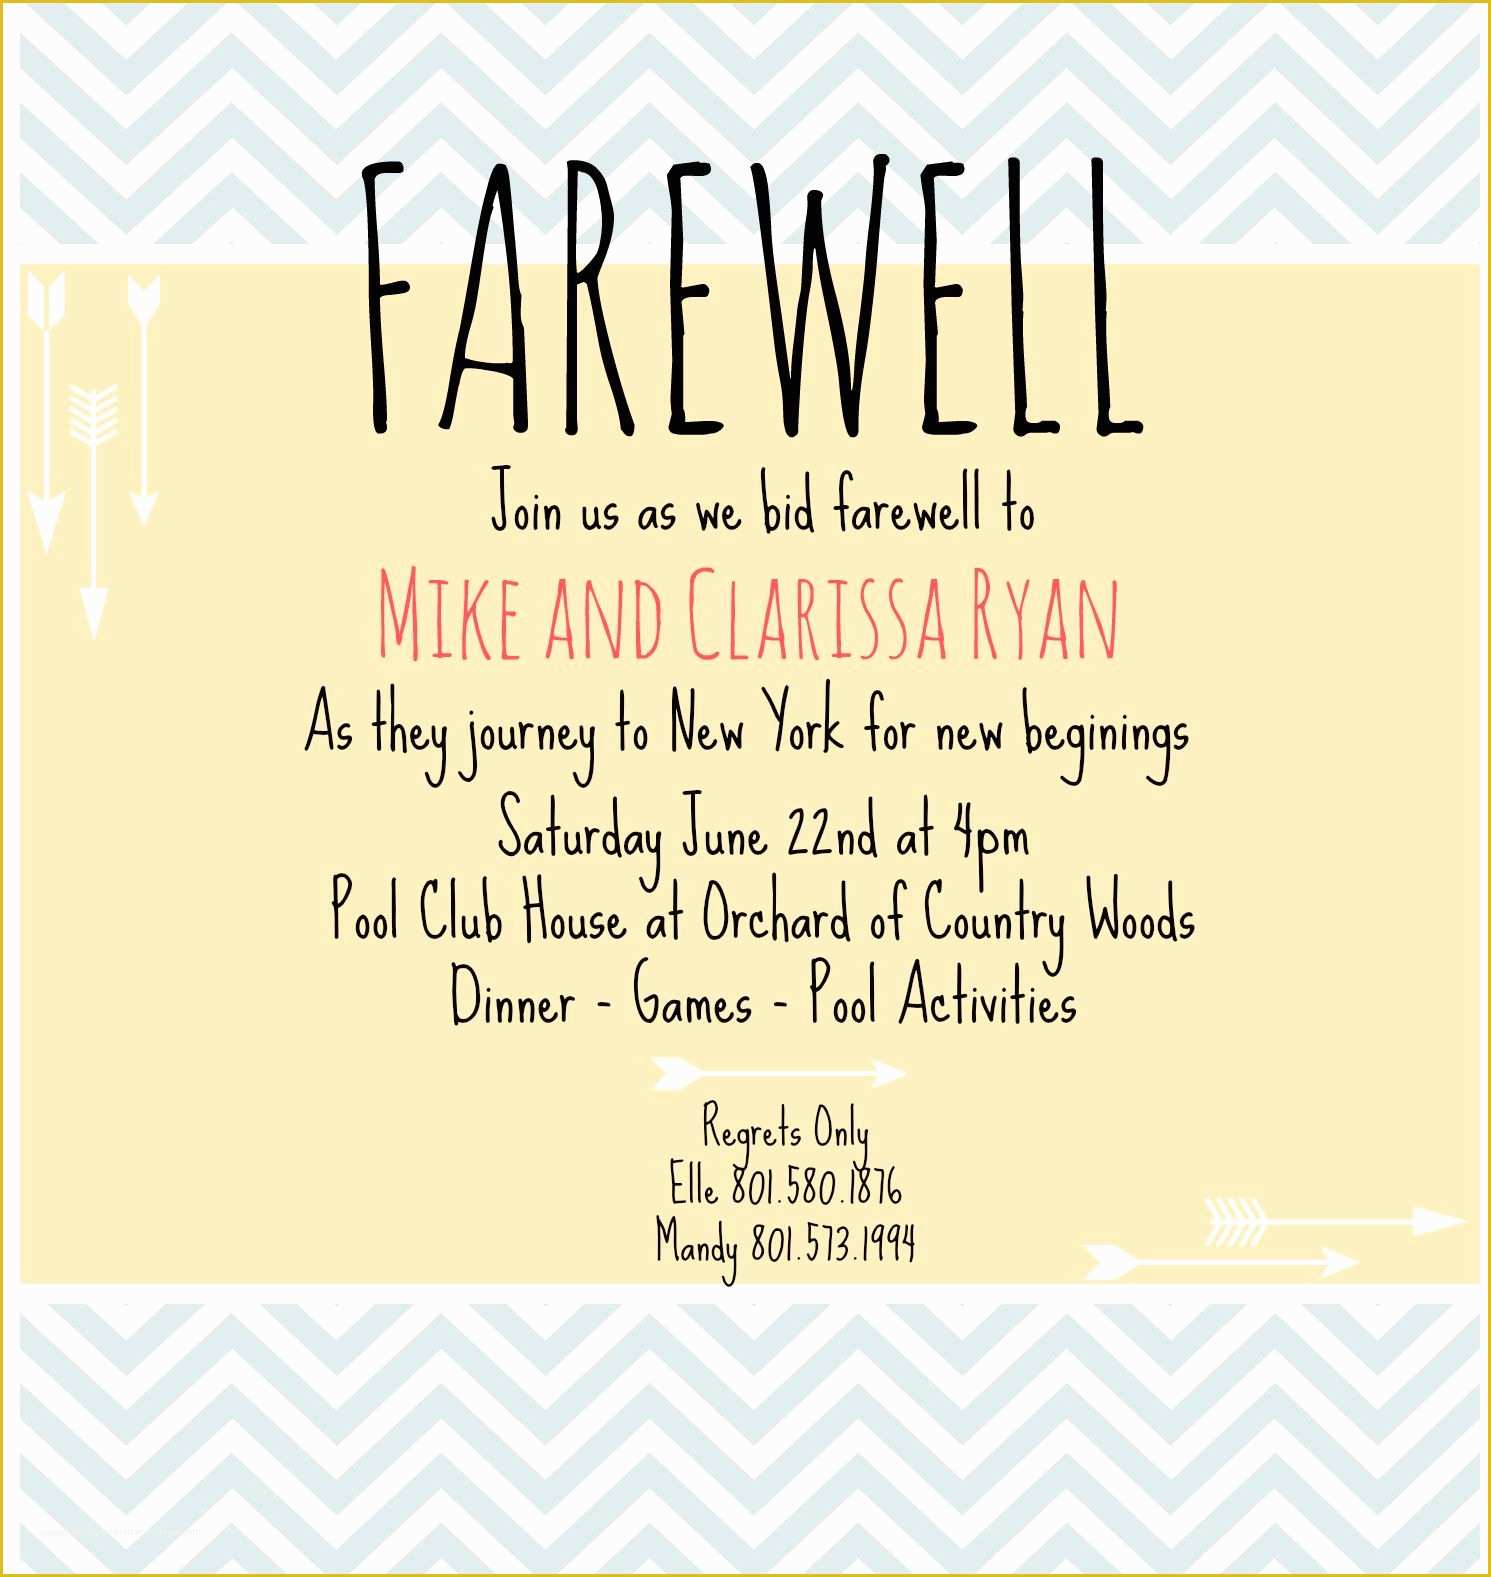 Free Farewell Invitation Templates Of Farewell Invite Picmonkey Creations